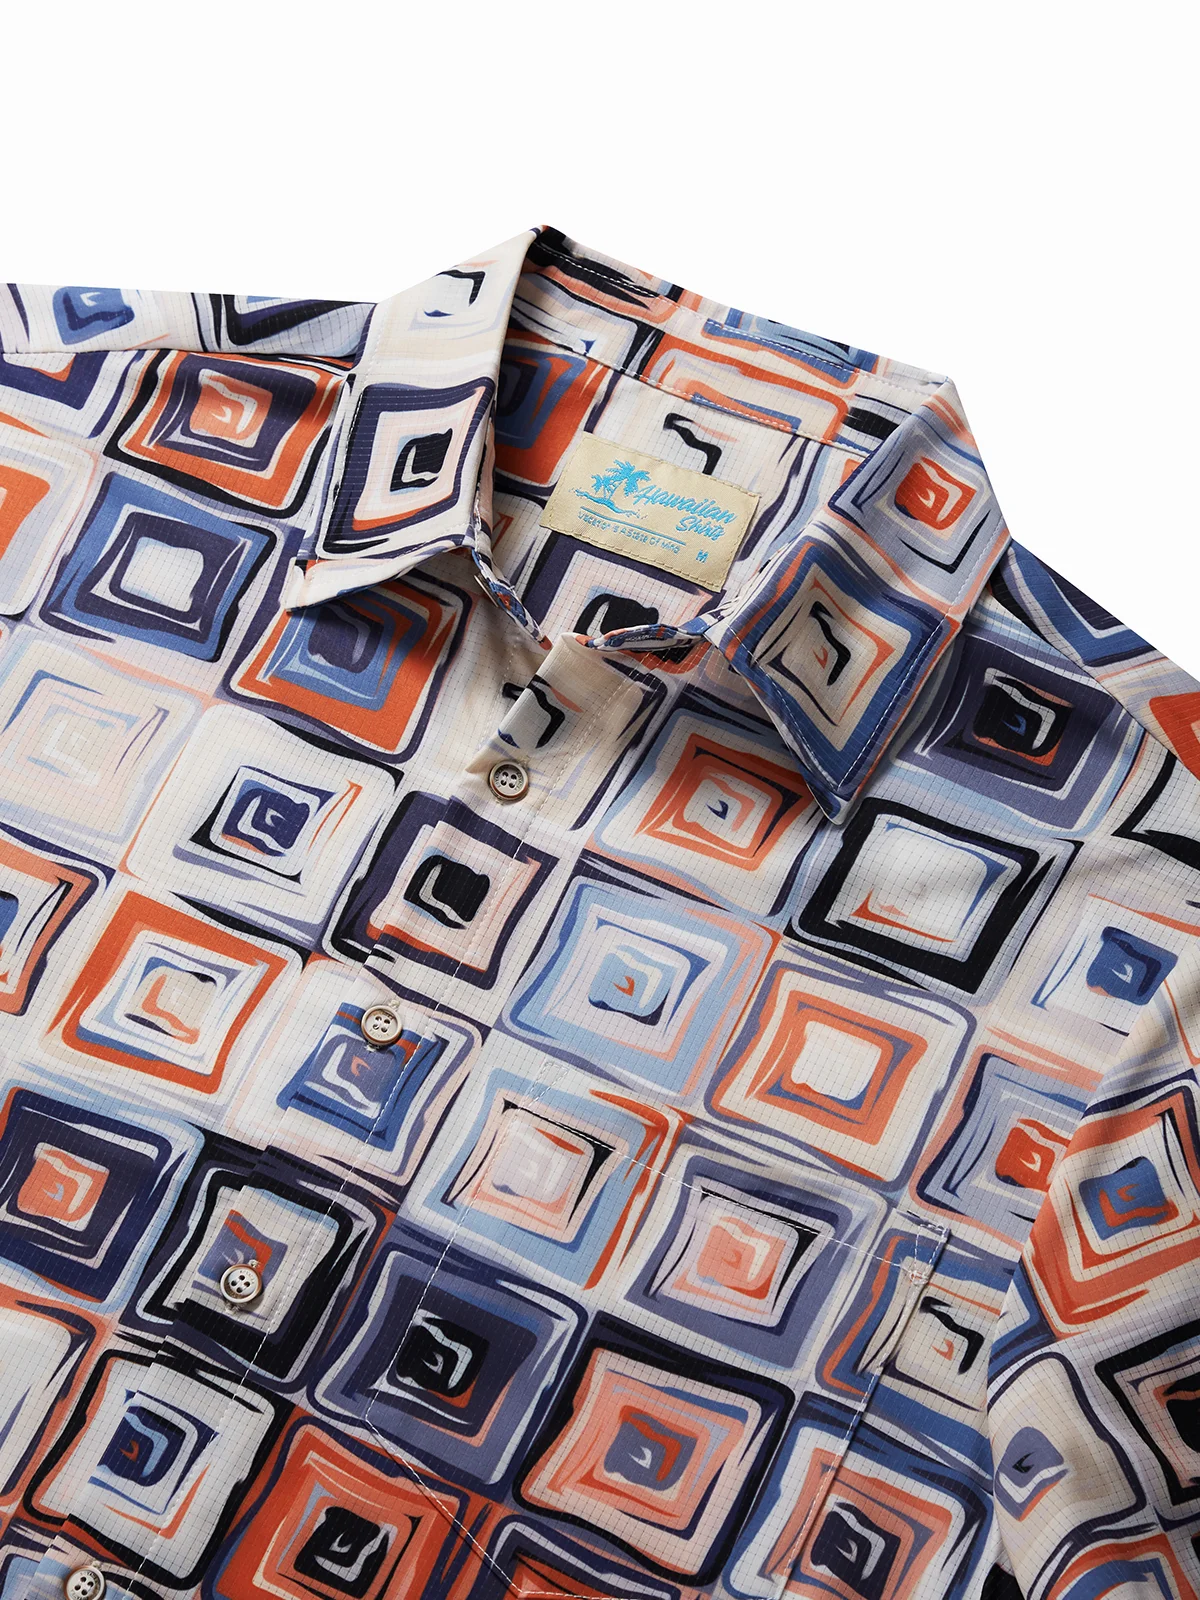 Royaura® Cool Ice Men's Hawaiian Shirts Medieval Geometry Sweat-wicking Breathable Wrinkle Free Pocket Shirts